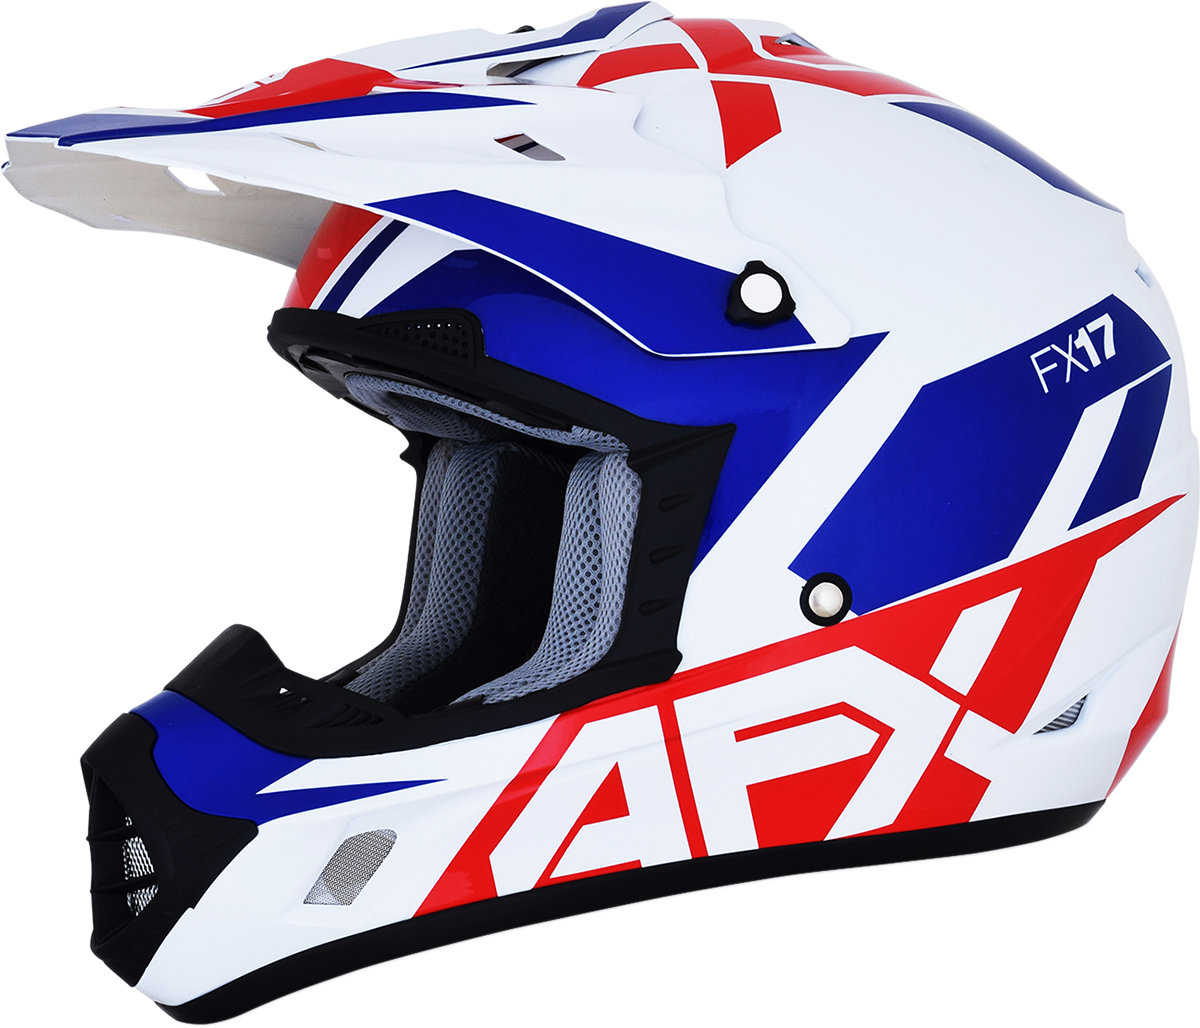 AFX FX-17 Helmet - Aced - Red/White/Blue - Large 0110-6481